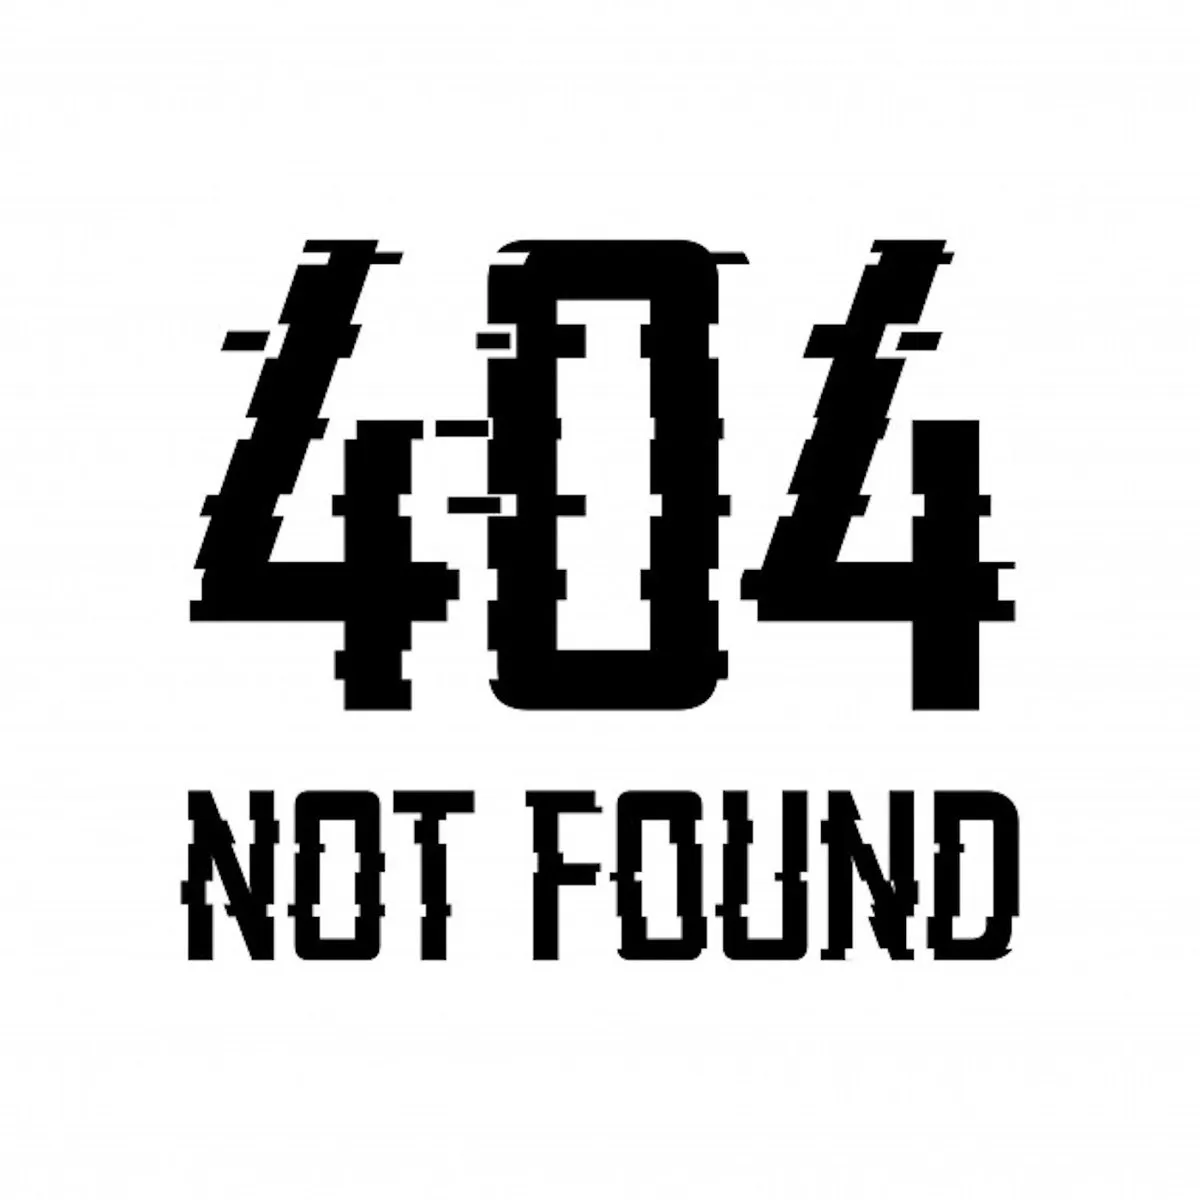 https://texno.blog/‘404 Not Found’ nədir?